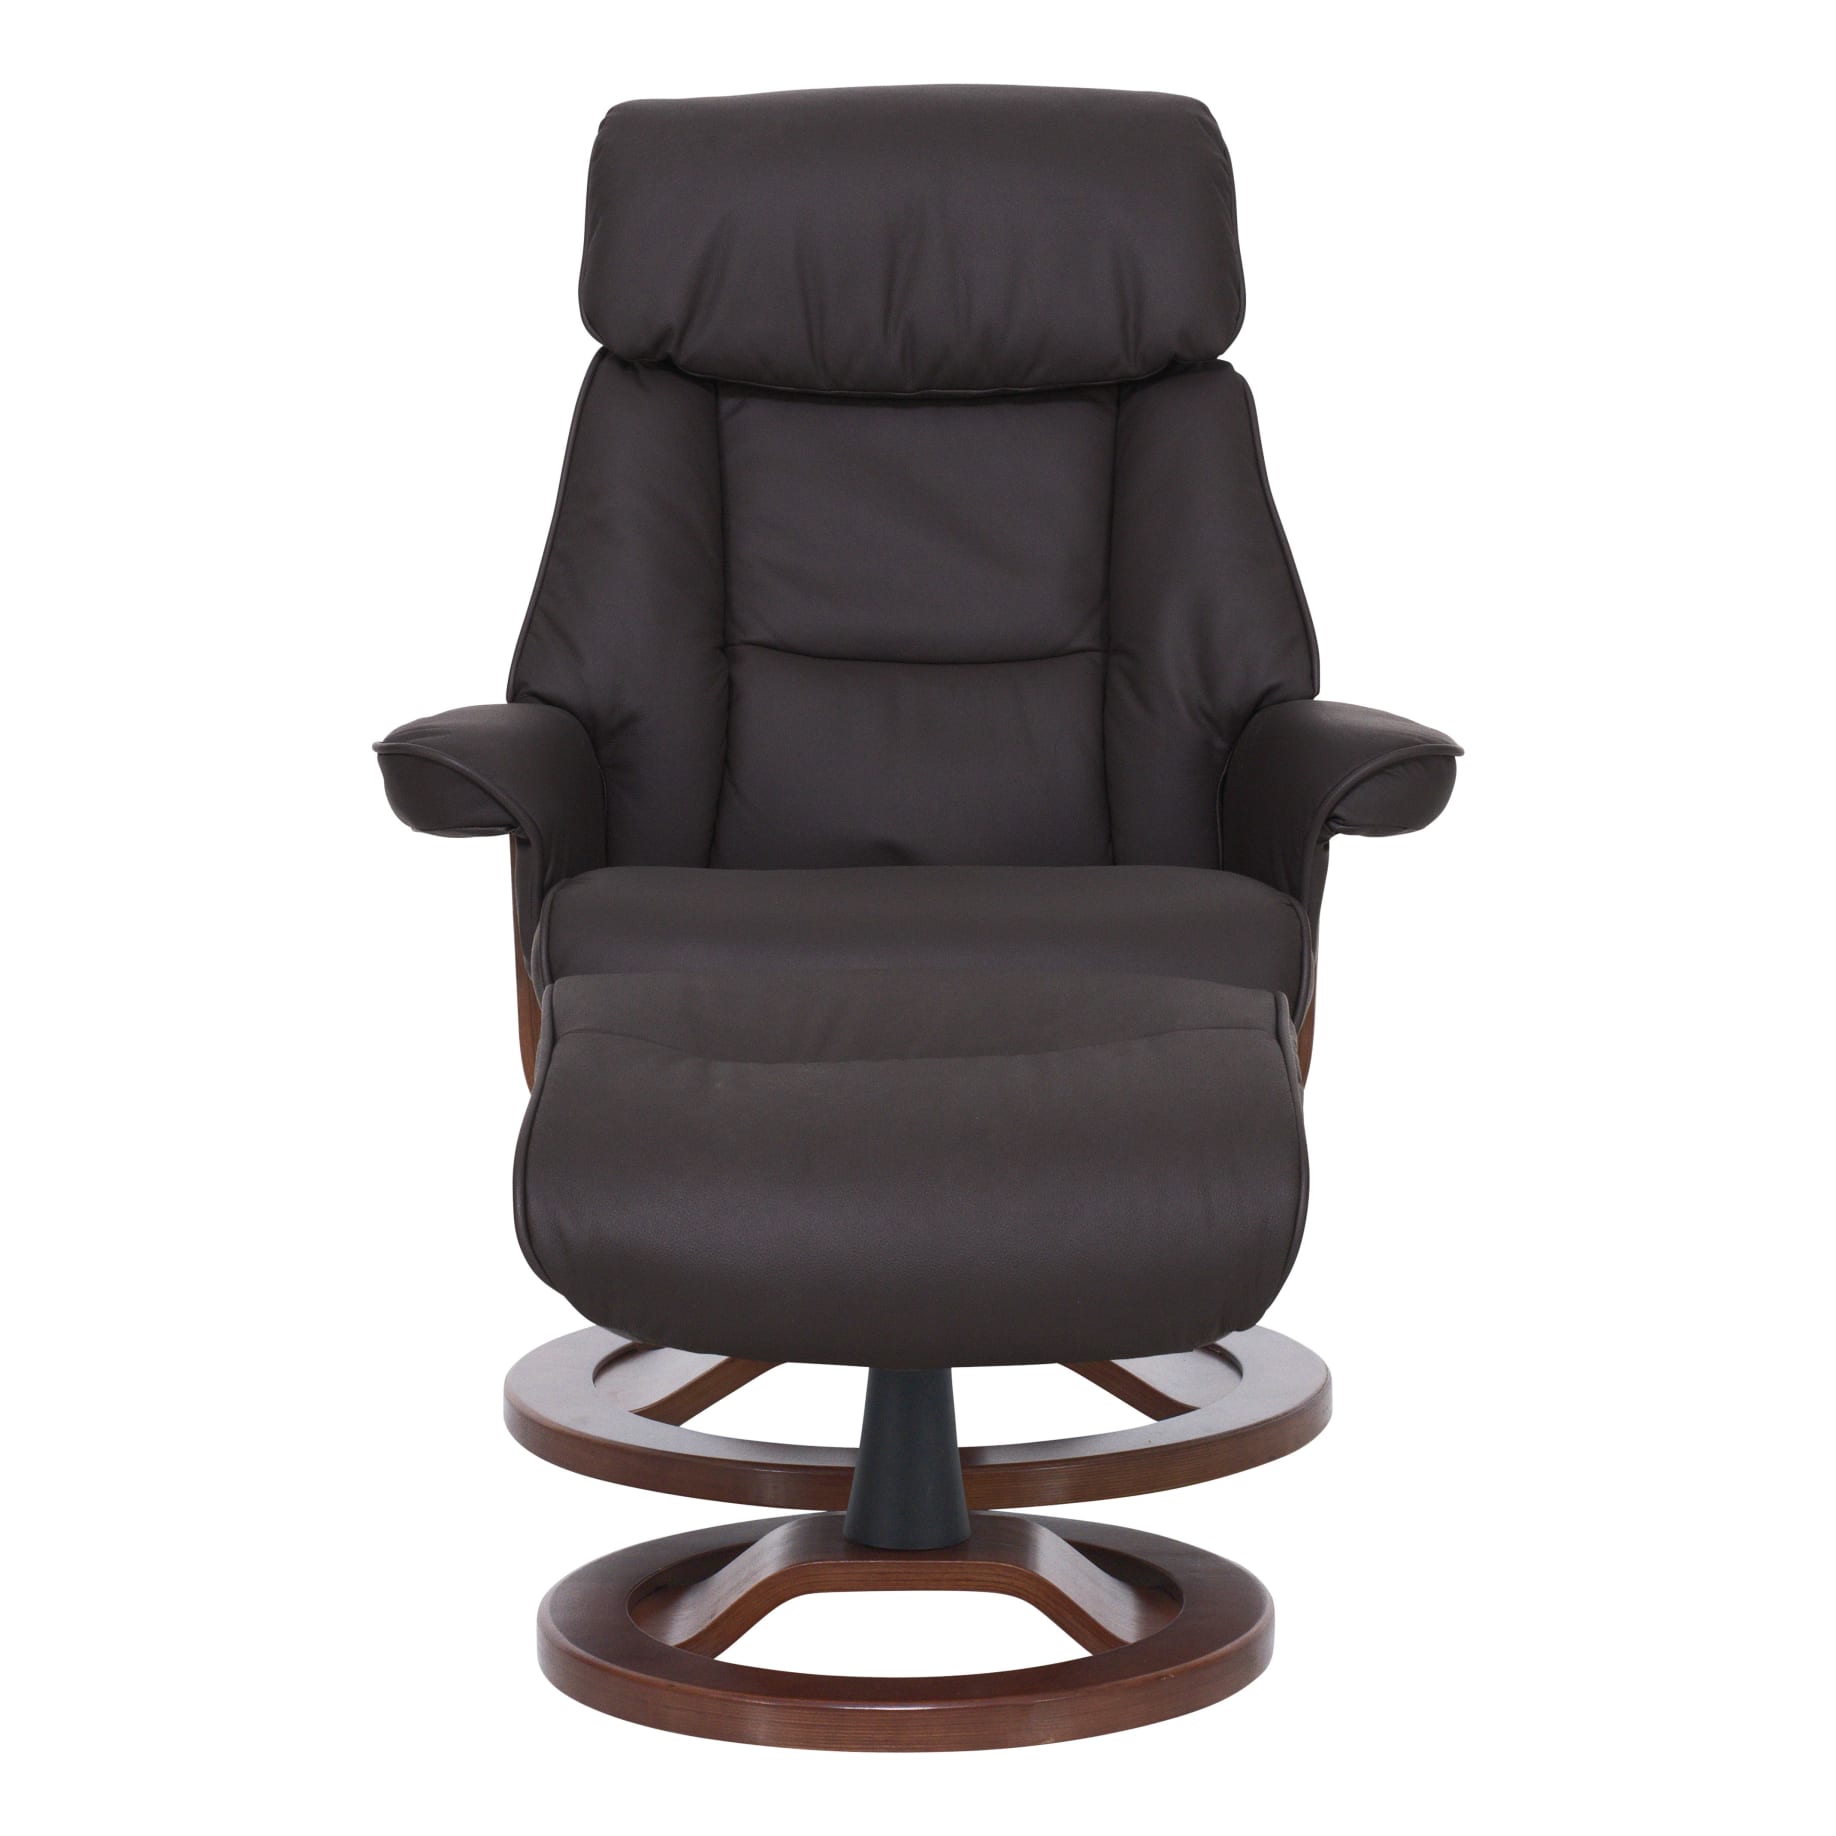 Reggie Recliner Chair + Ottoman  in Chocolate / Chocolate Leg